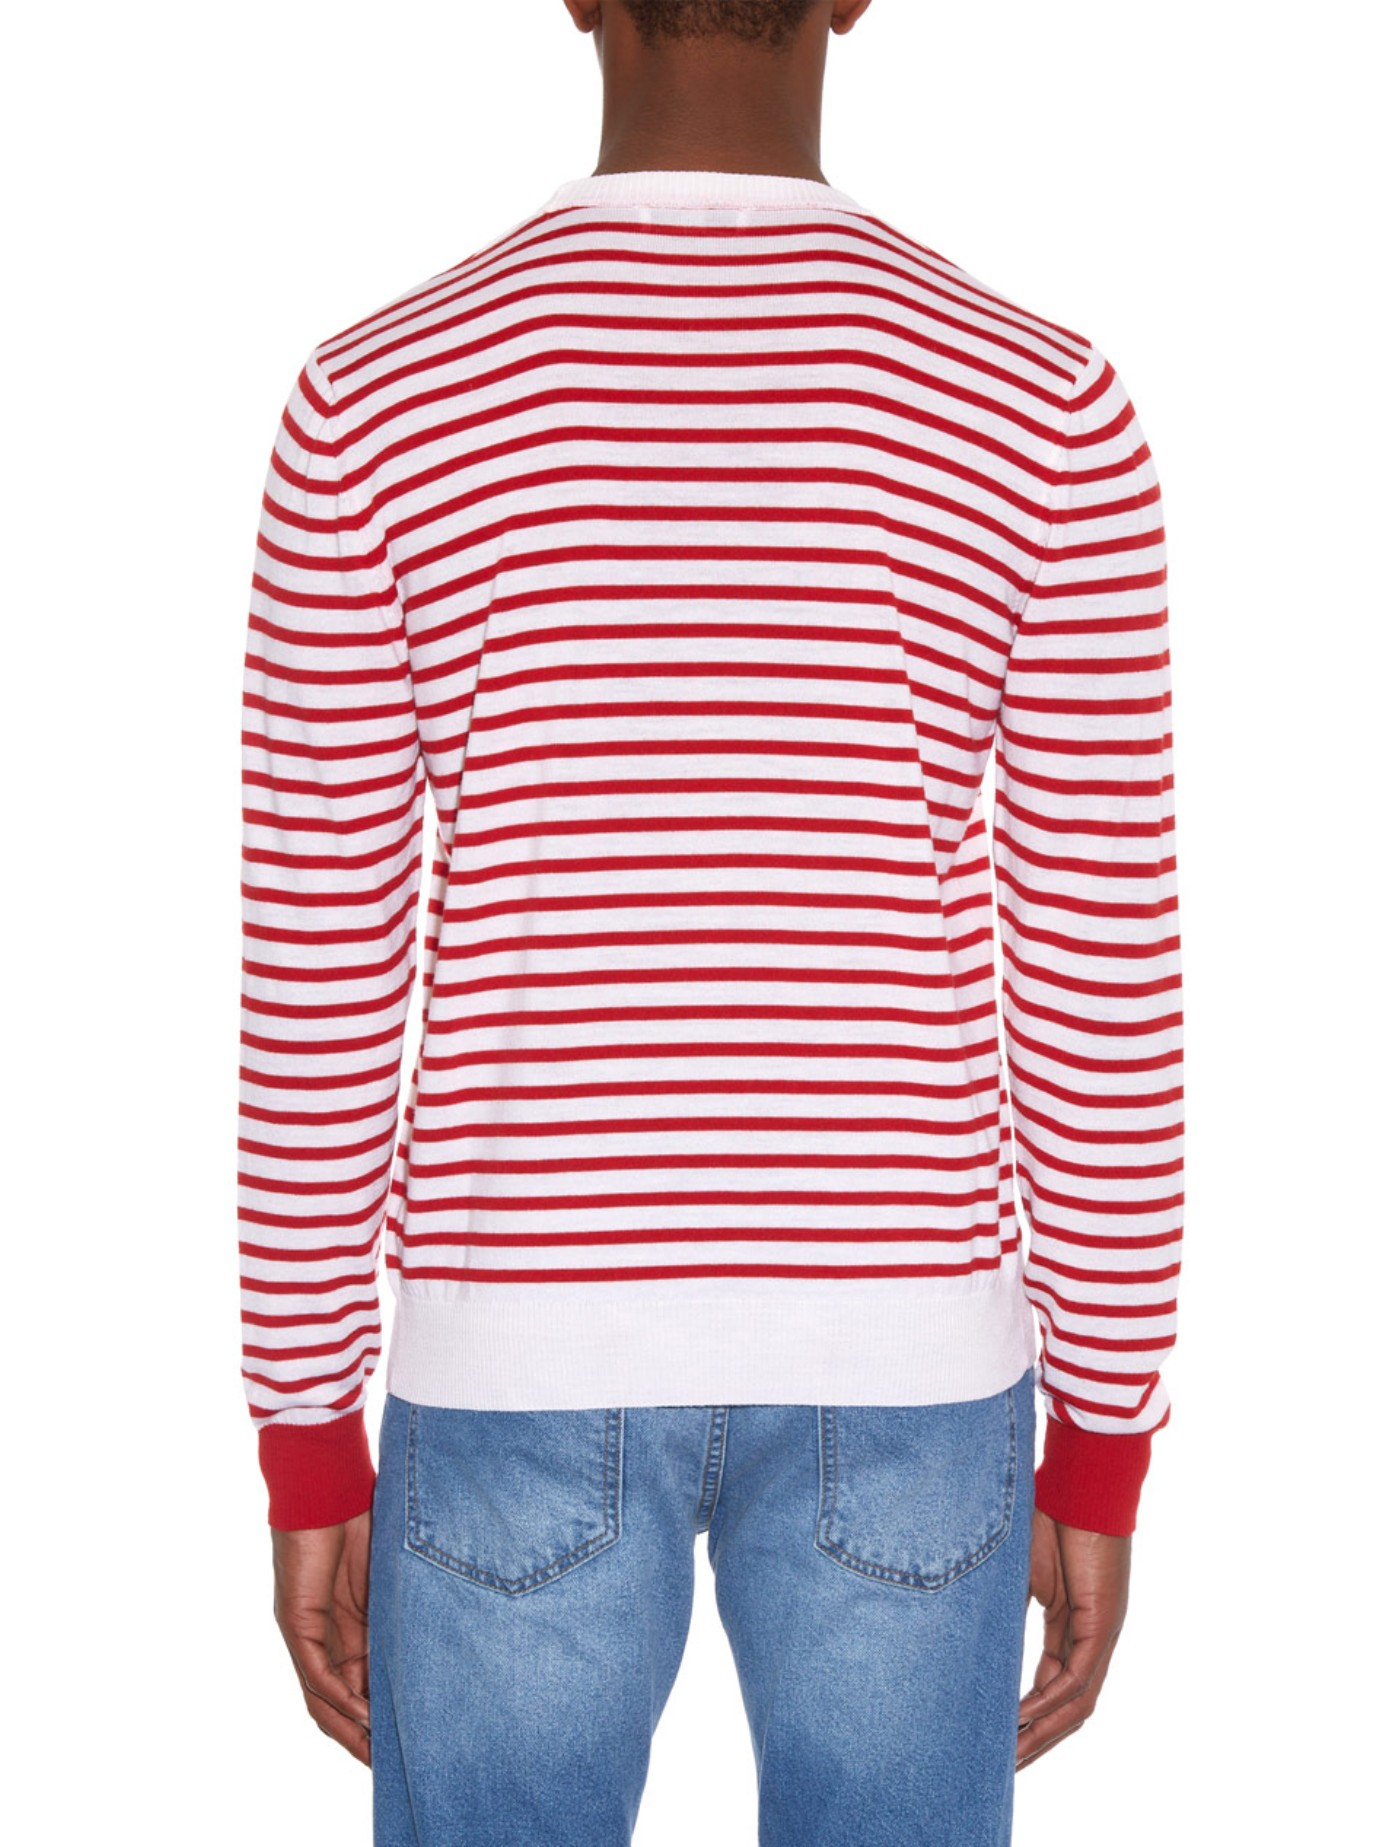 Lyst - AMI Breton-stripe Crew-neck Sweater in Red for Men